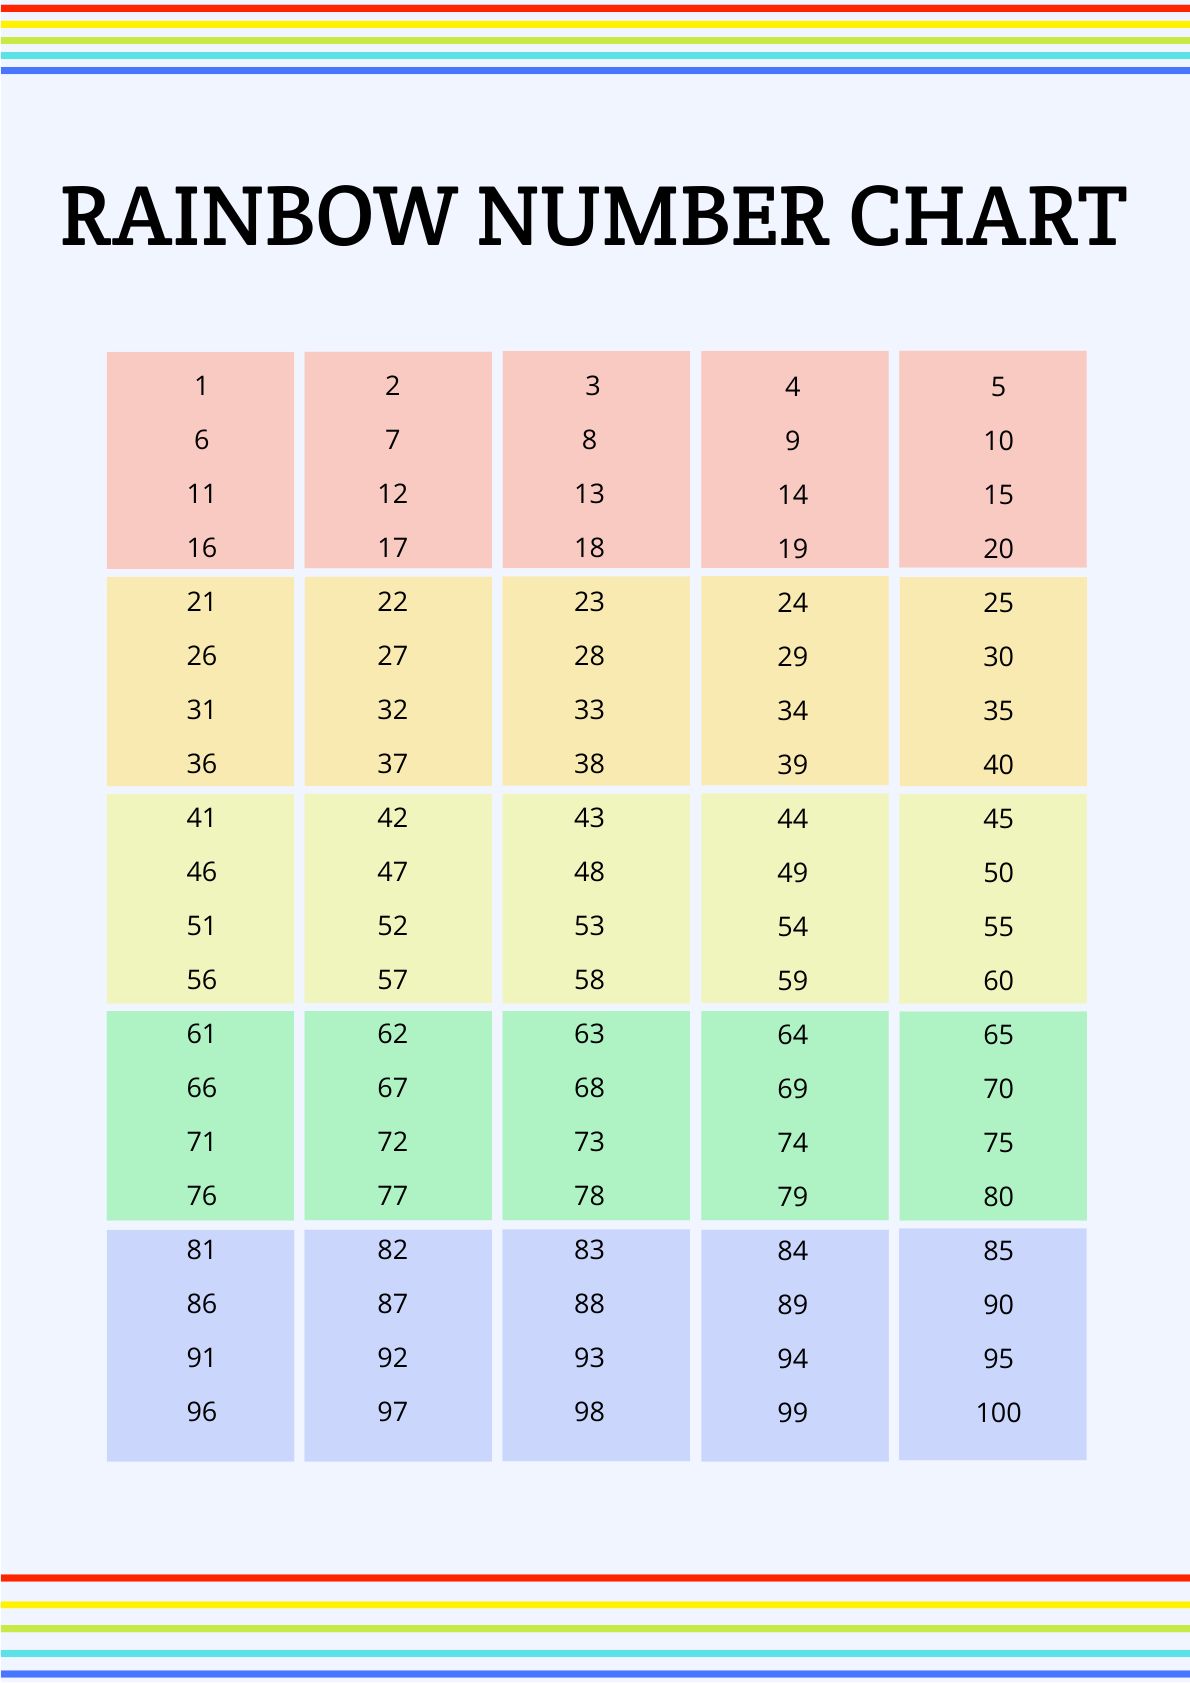 Rainbow Number Chart in PDF, Illustrator